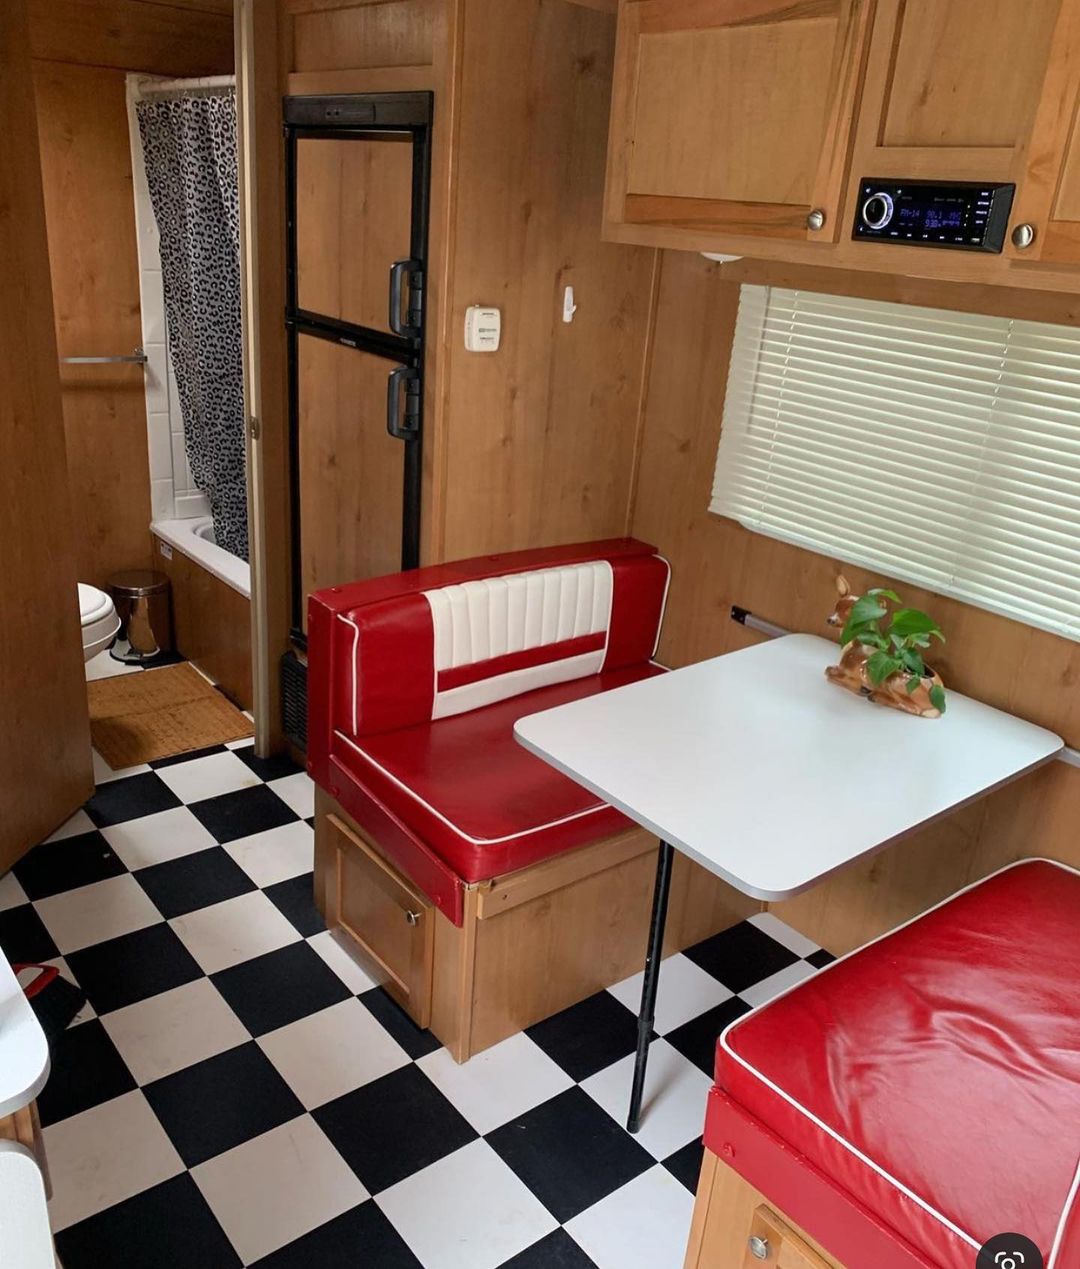 RV caravan travel trailer camper airstream trailer